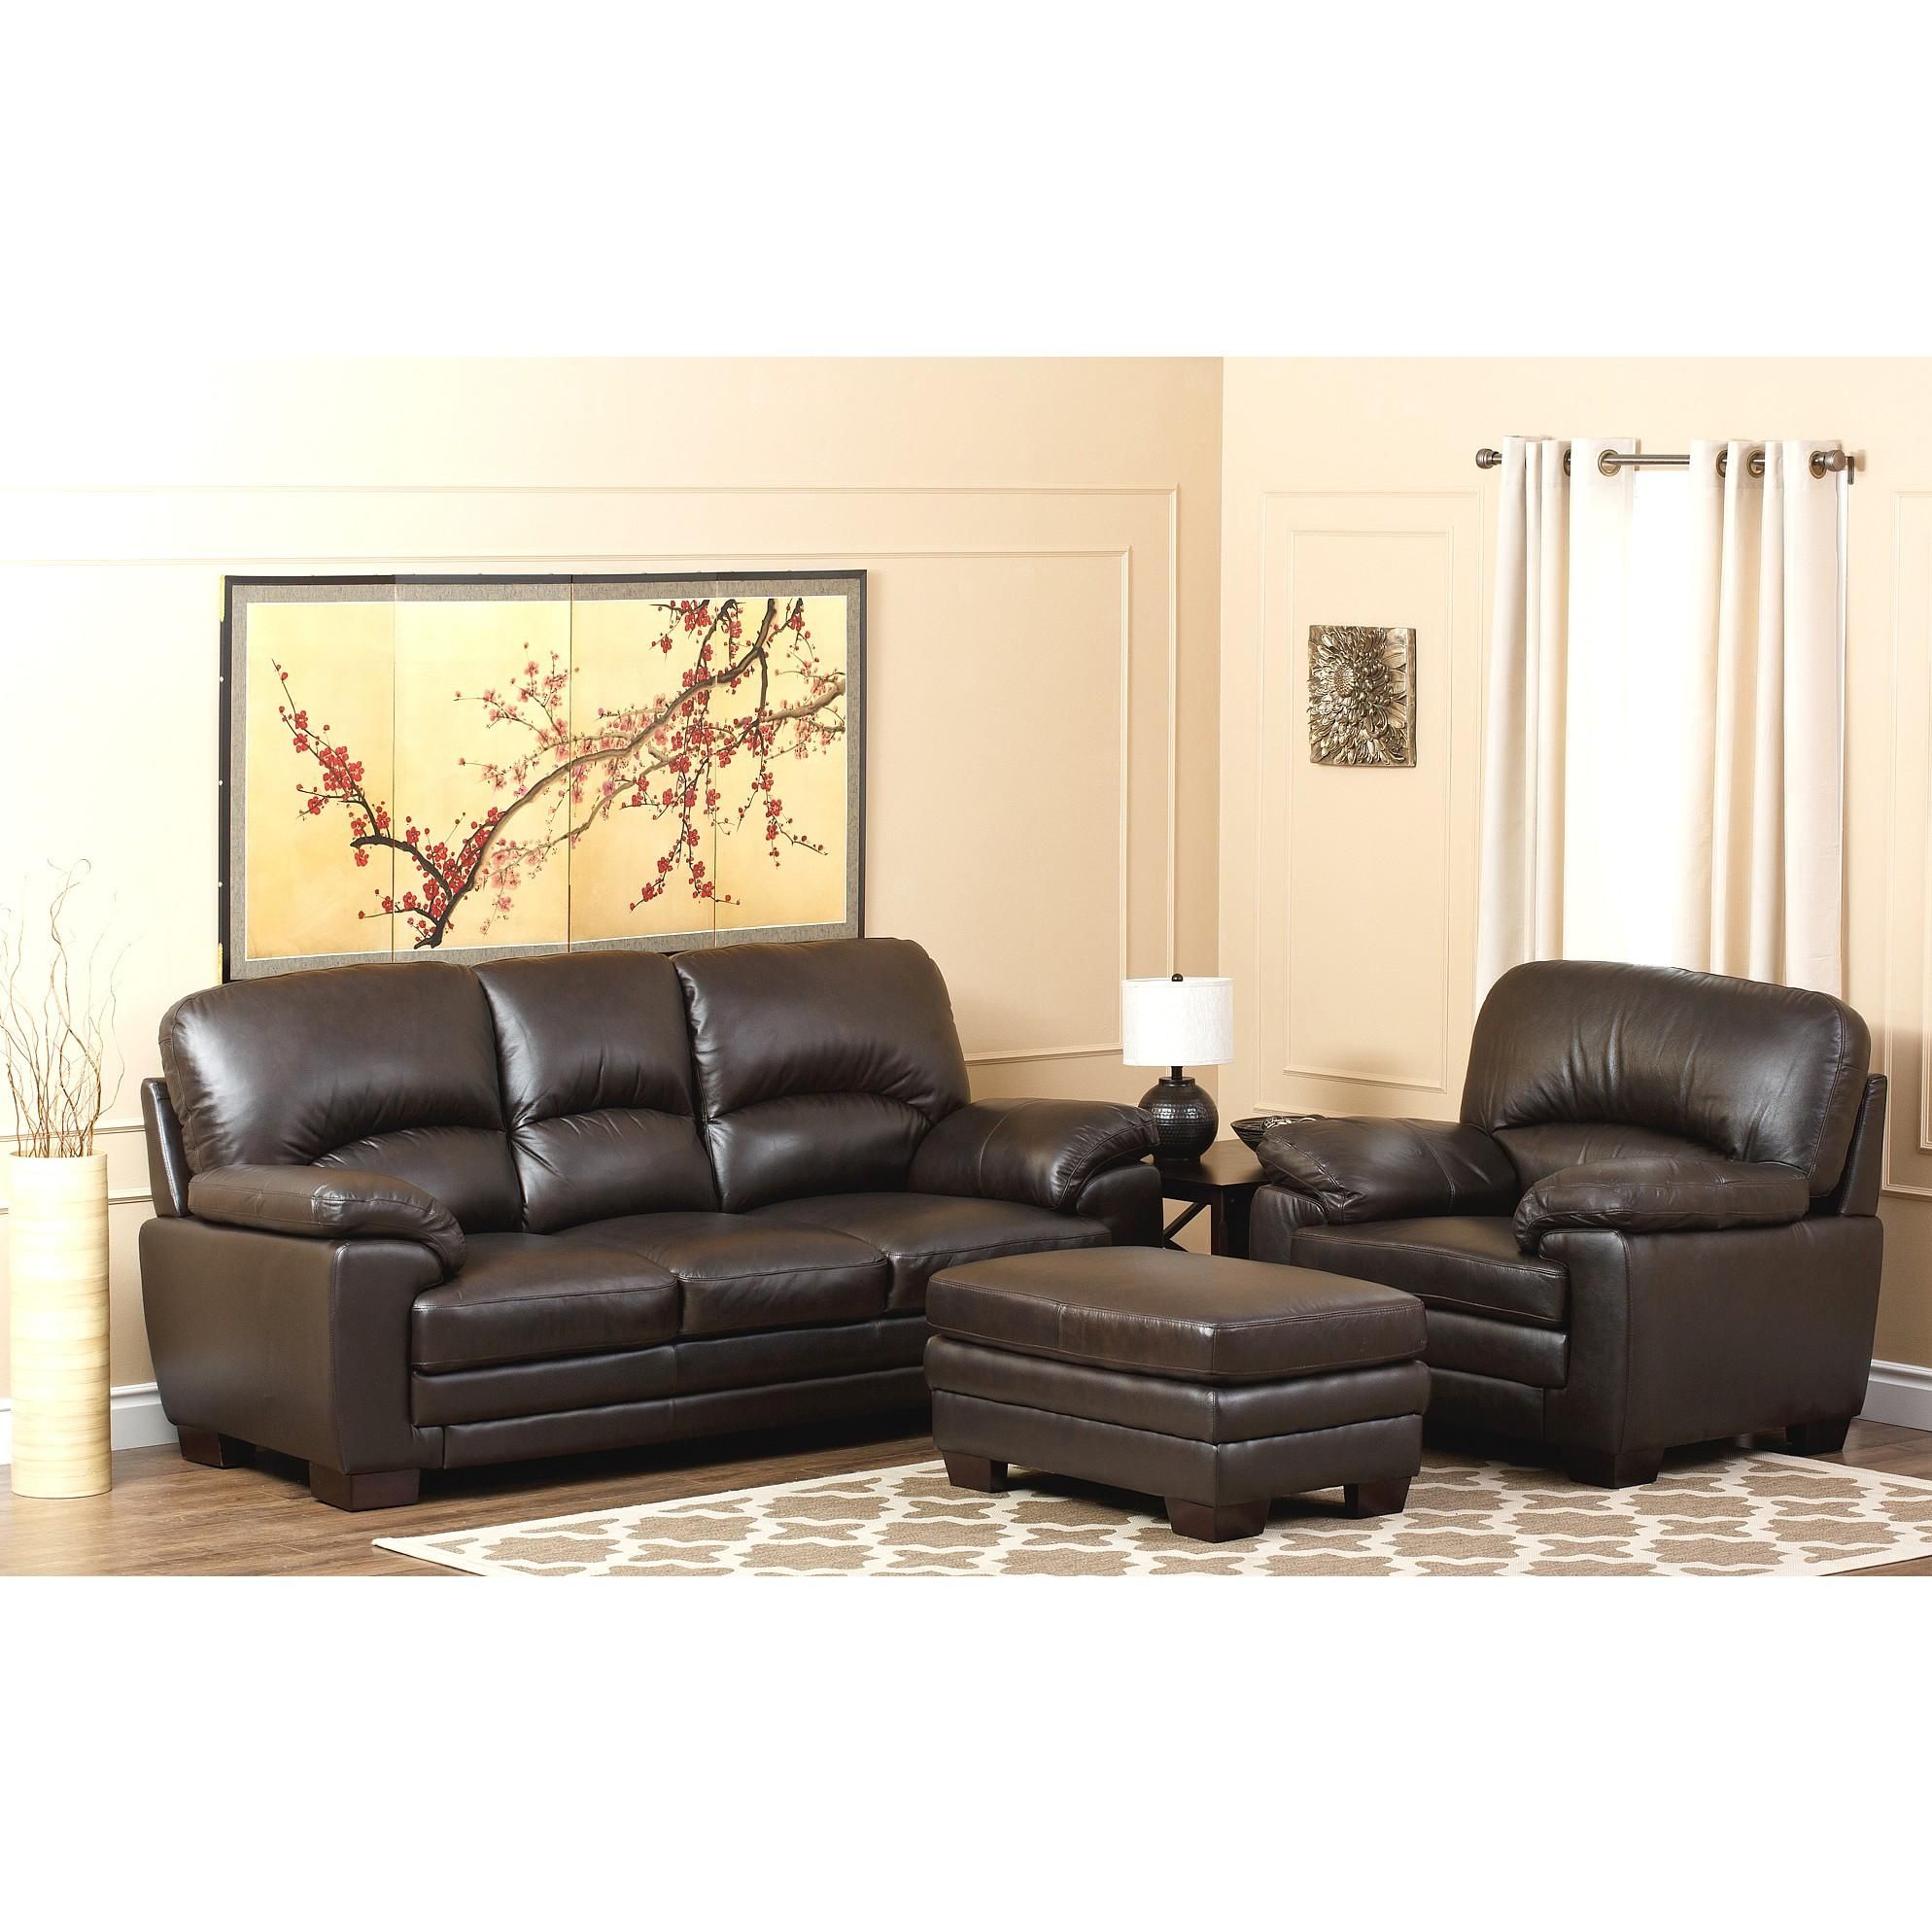 Sofa : Leather Sofas Orange County Excellent Home Design Pertaining To Sofas Orange County (View 15 of 20)